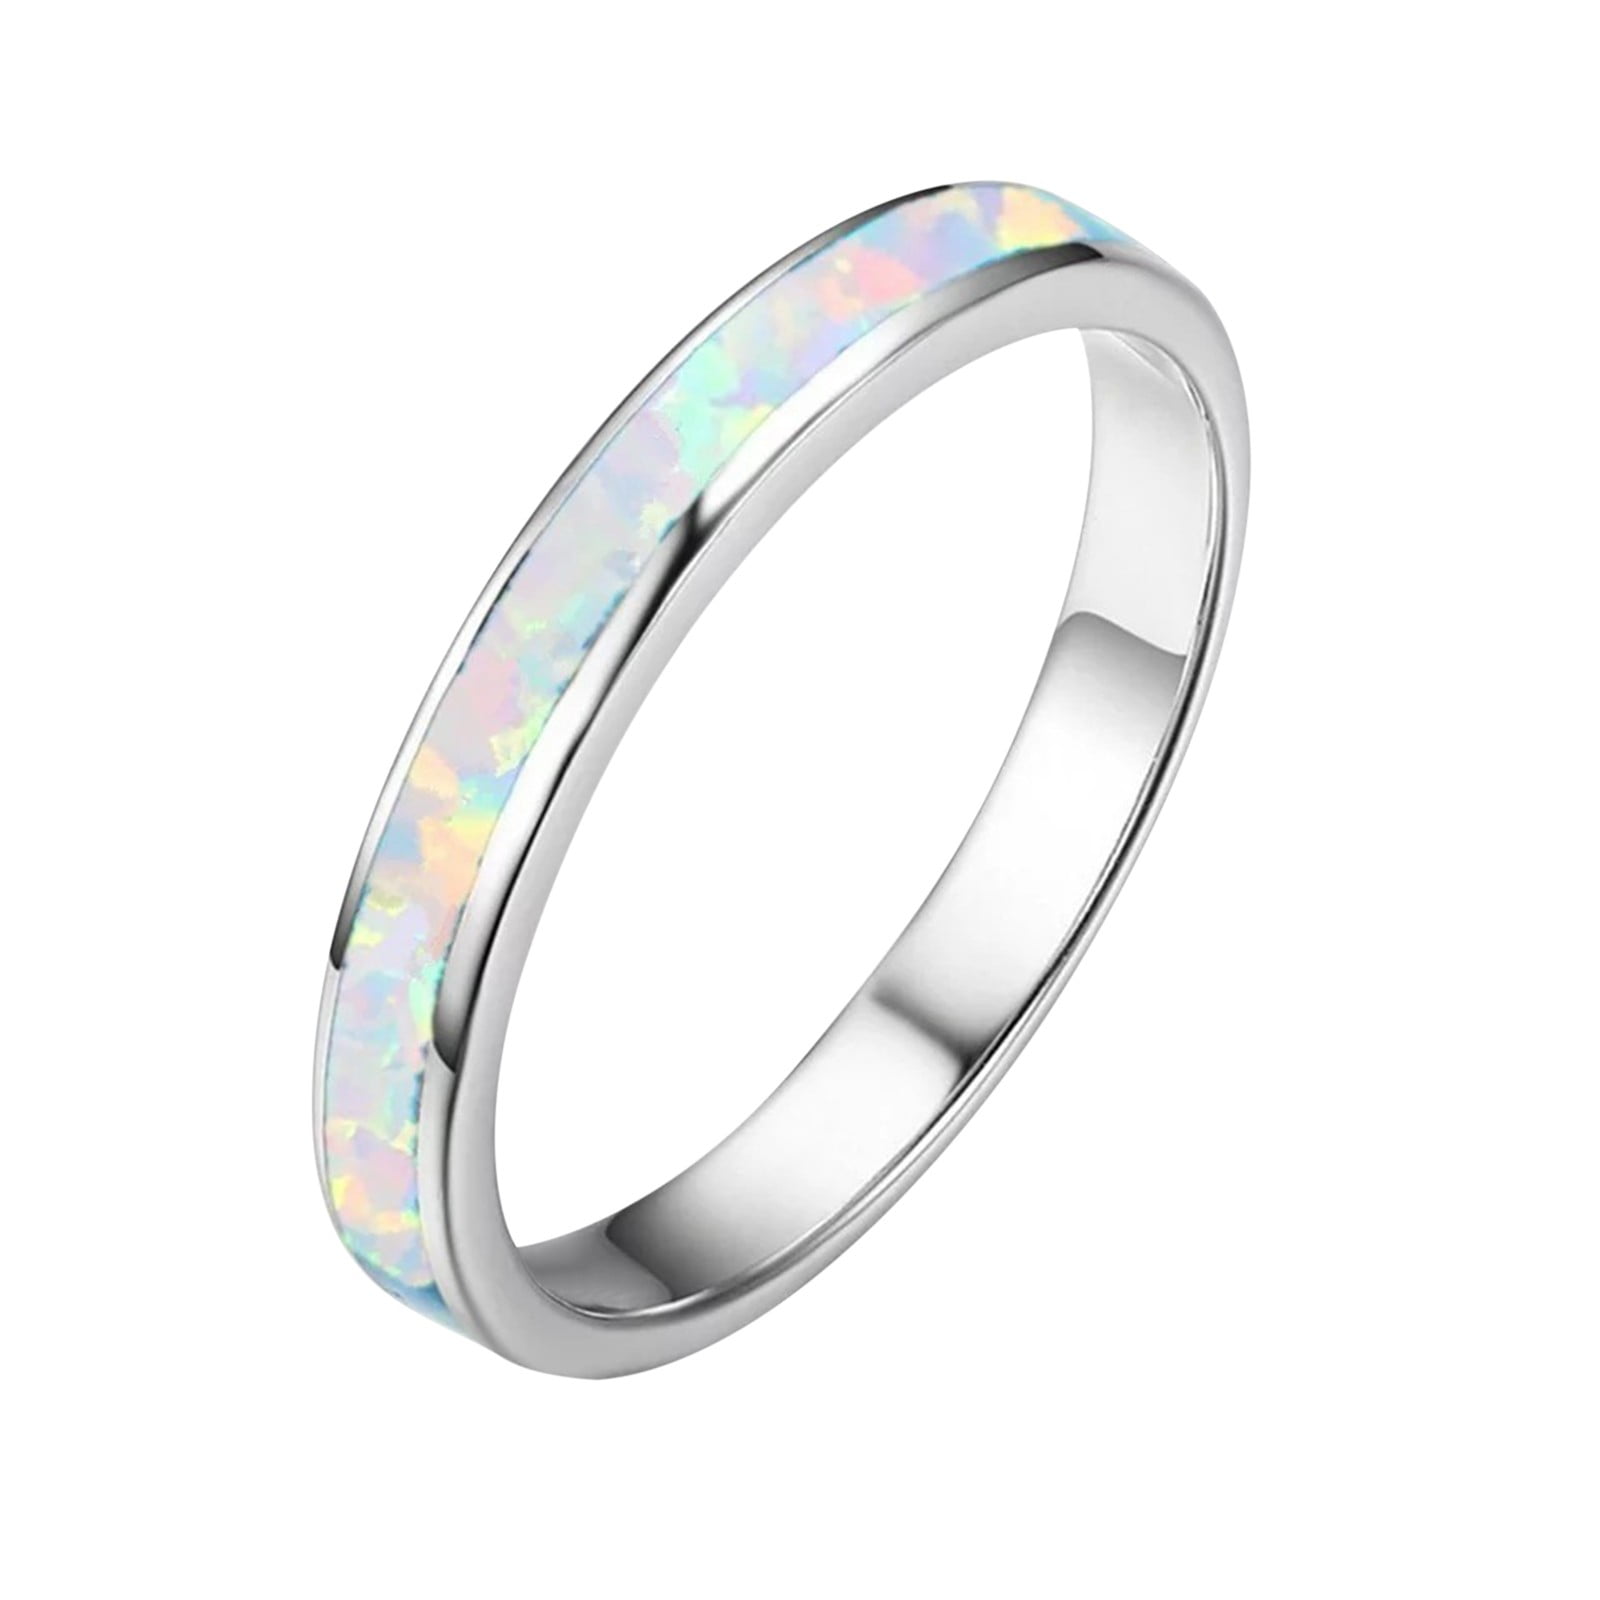 Kcodviy Mens Tungsten Wedding Rings Created-opal Inlay Wedding Bands ...